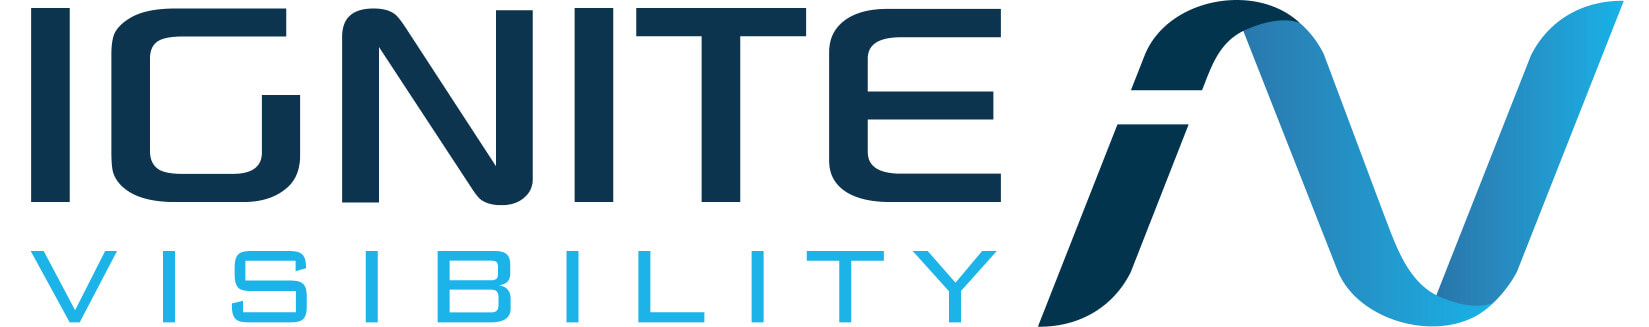 Best Local SEO Company Logo: Ignite Visibility